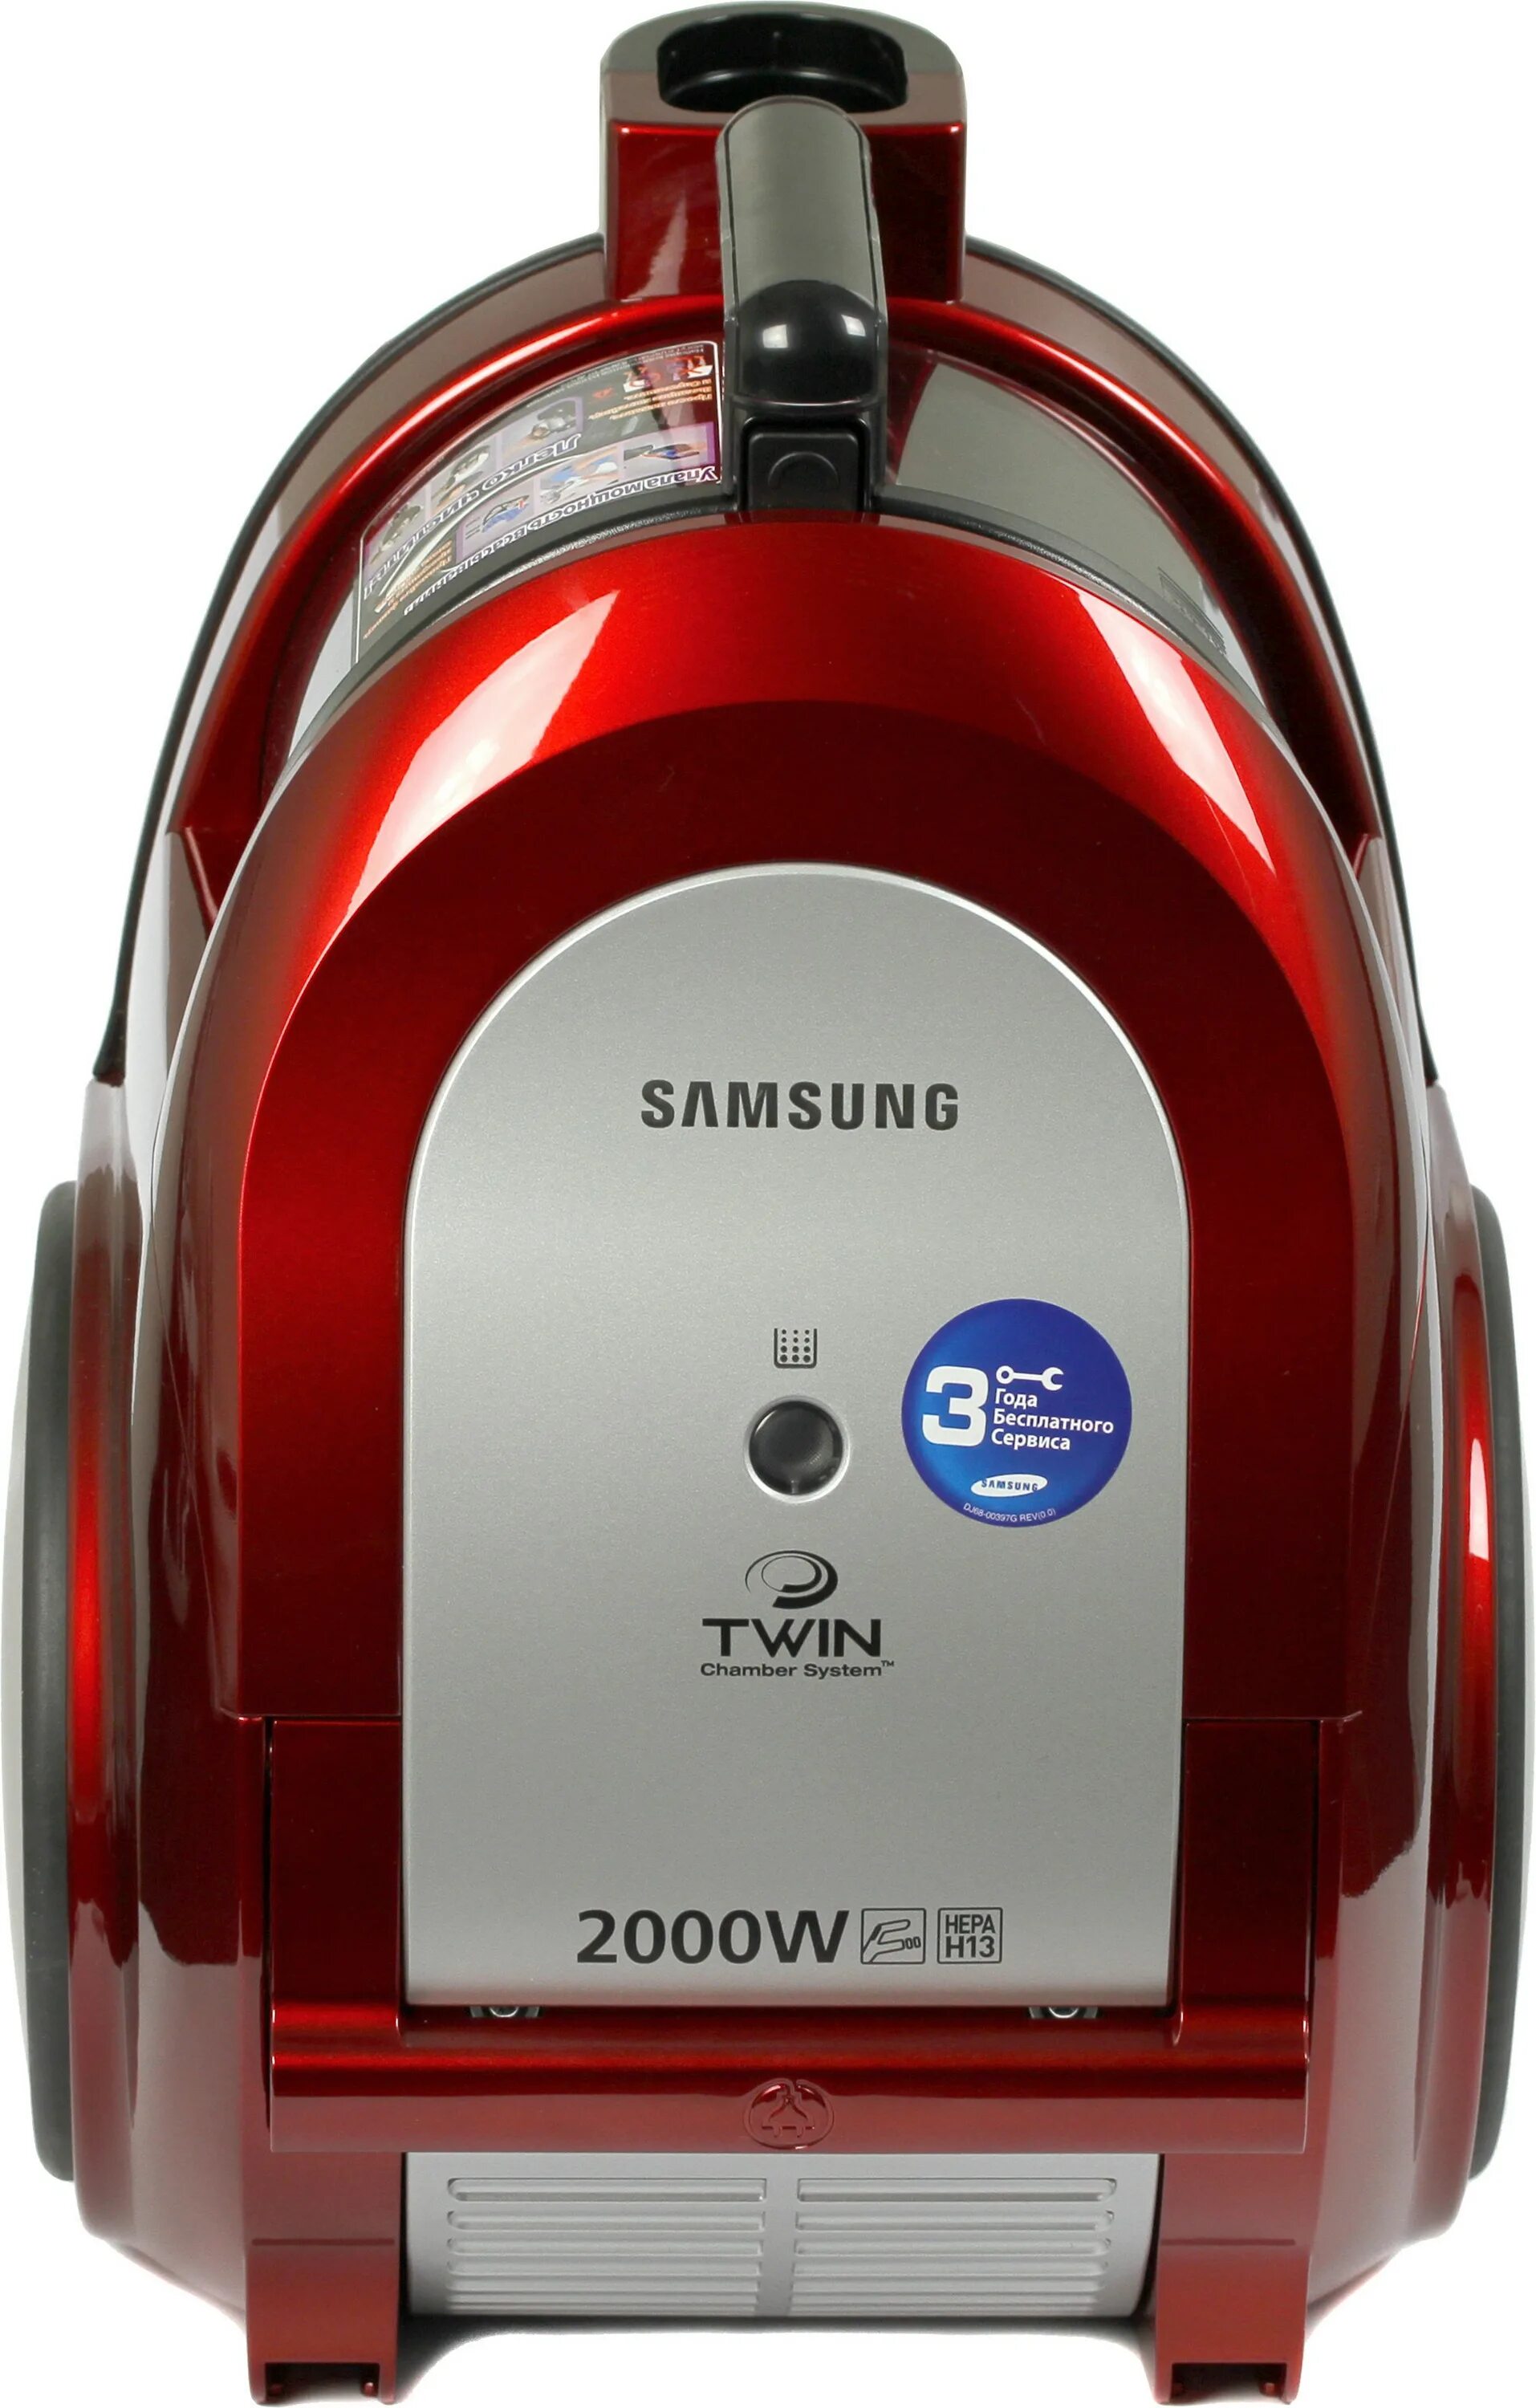 Samsung Twin 2000w. Пылесос Samsung Twin 2000w. Пылесос Samsung VCC 6590 h3r/xev. Пылесос самсунг 2000w EPA. Пылесосы samsung модели